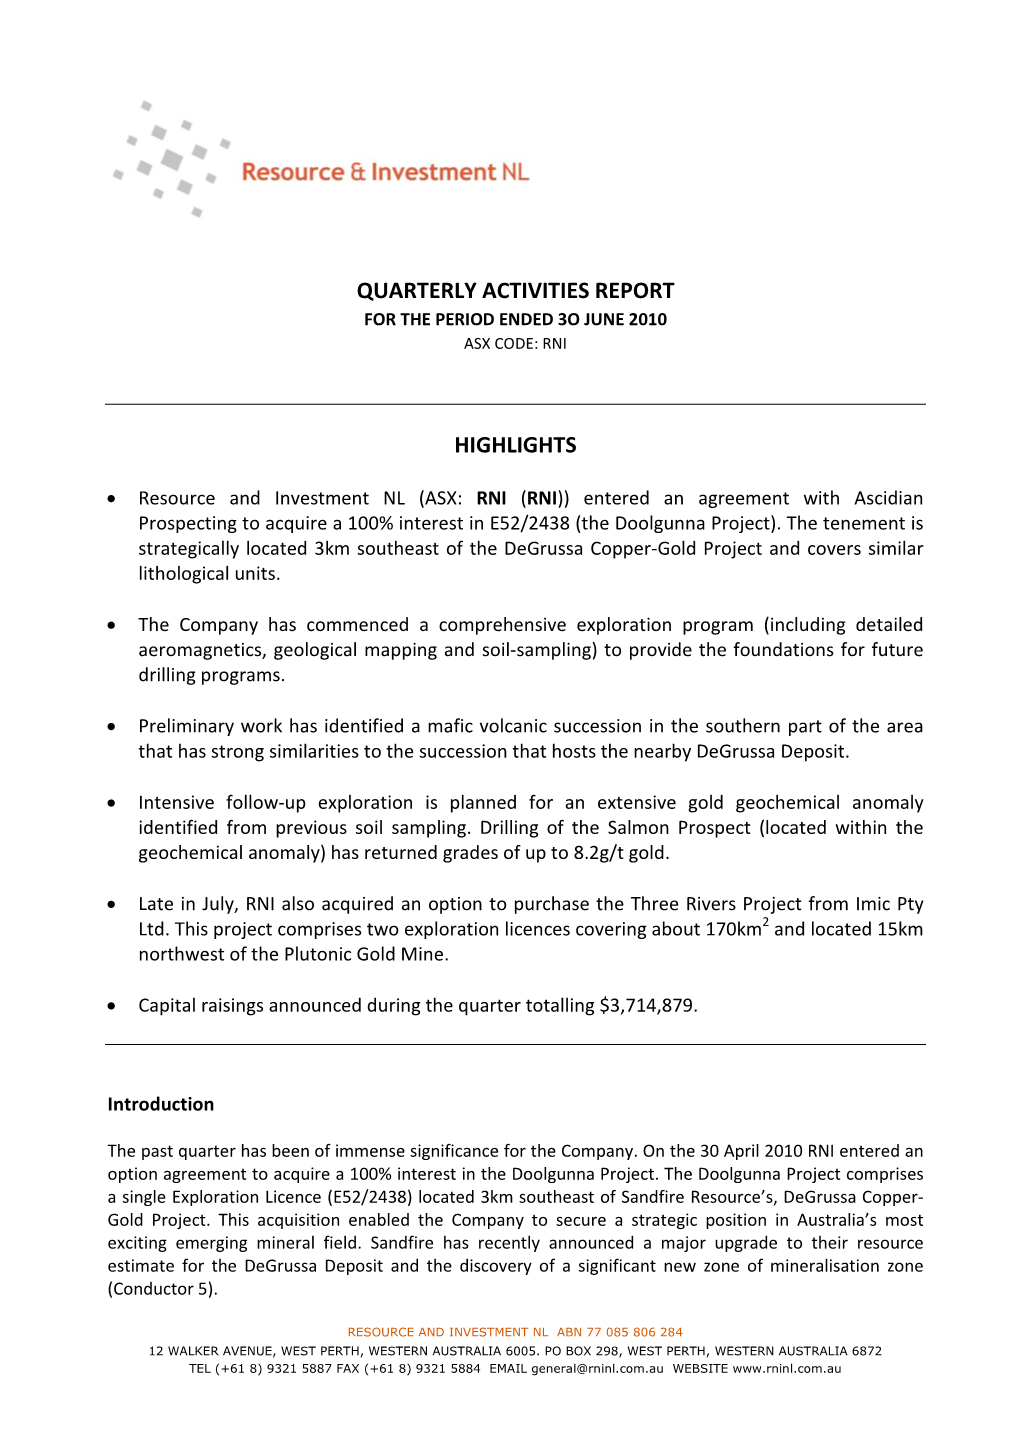 Quarterly Activities Report Highlights